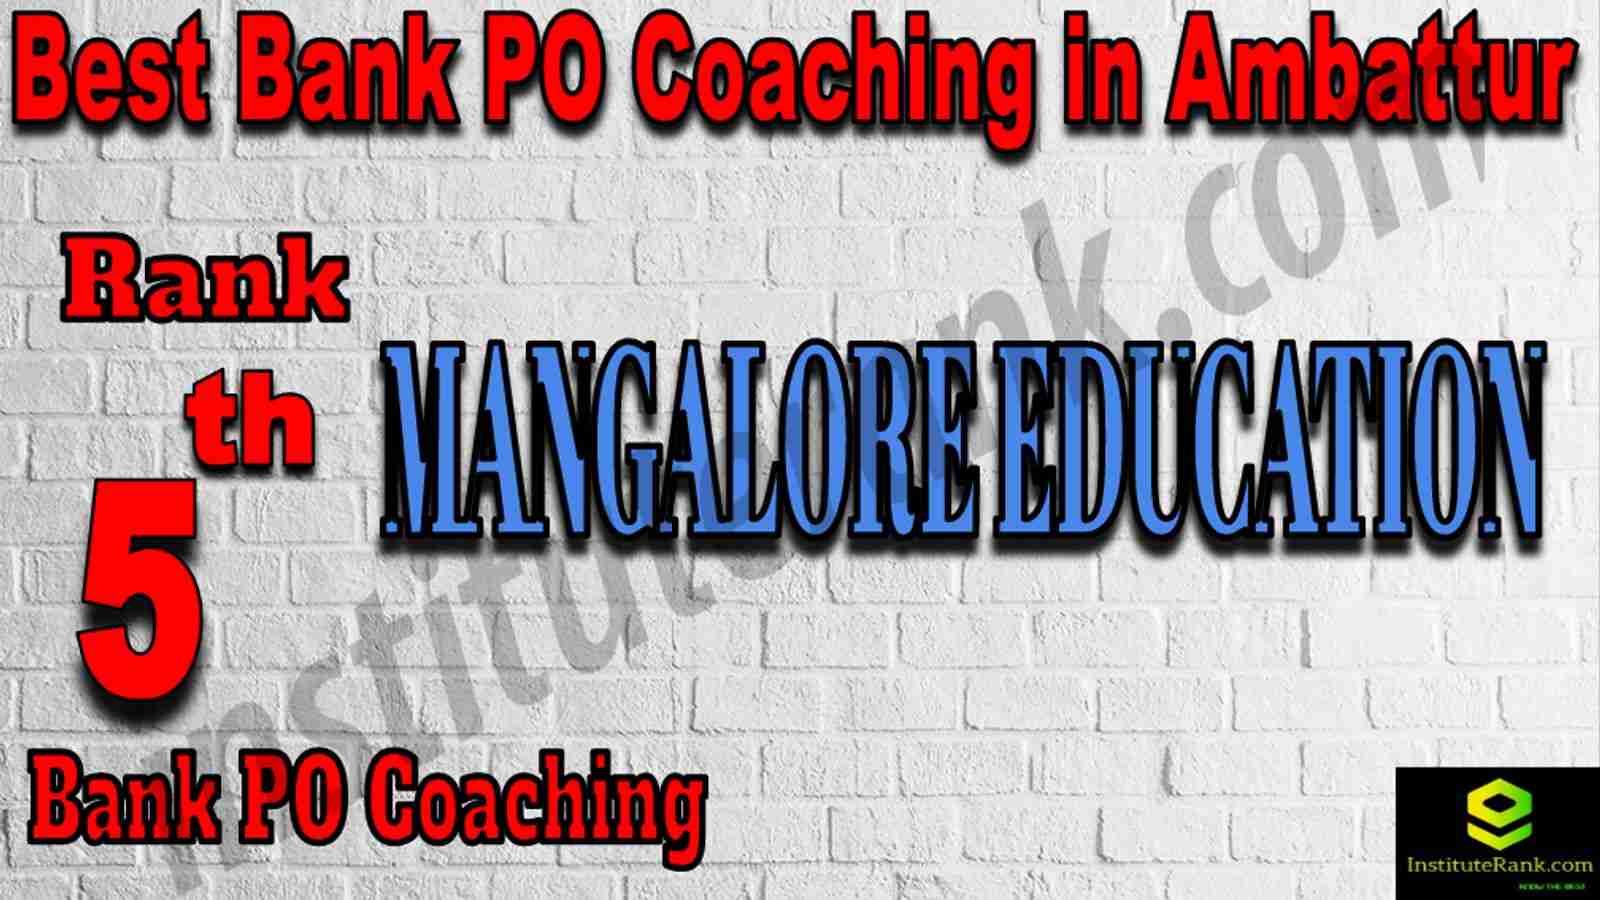 5th Best Bank PO Coaching in Ambattur